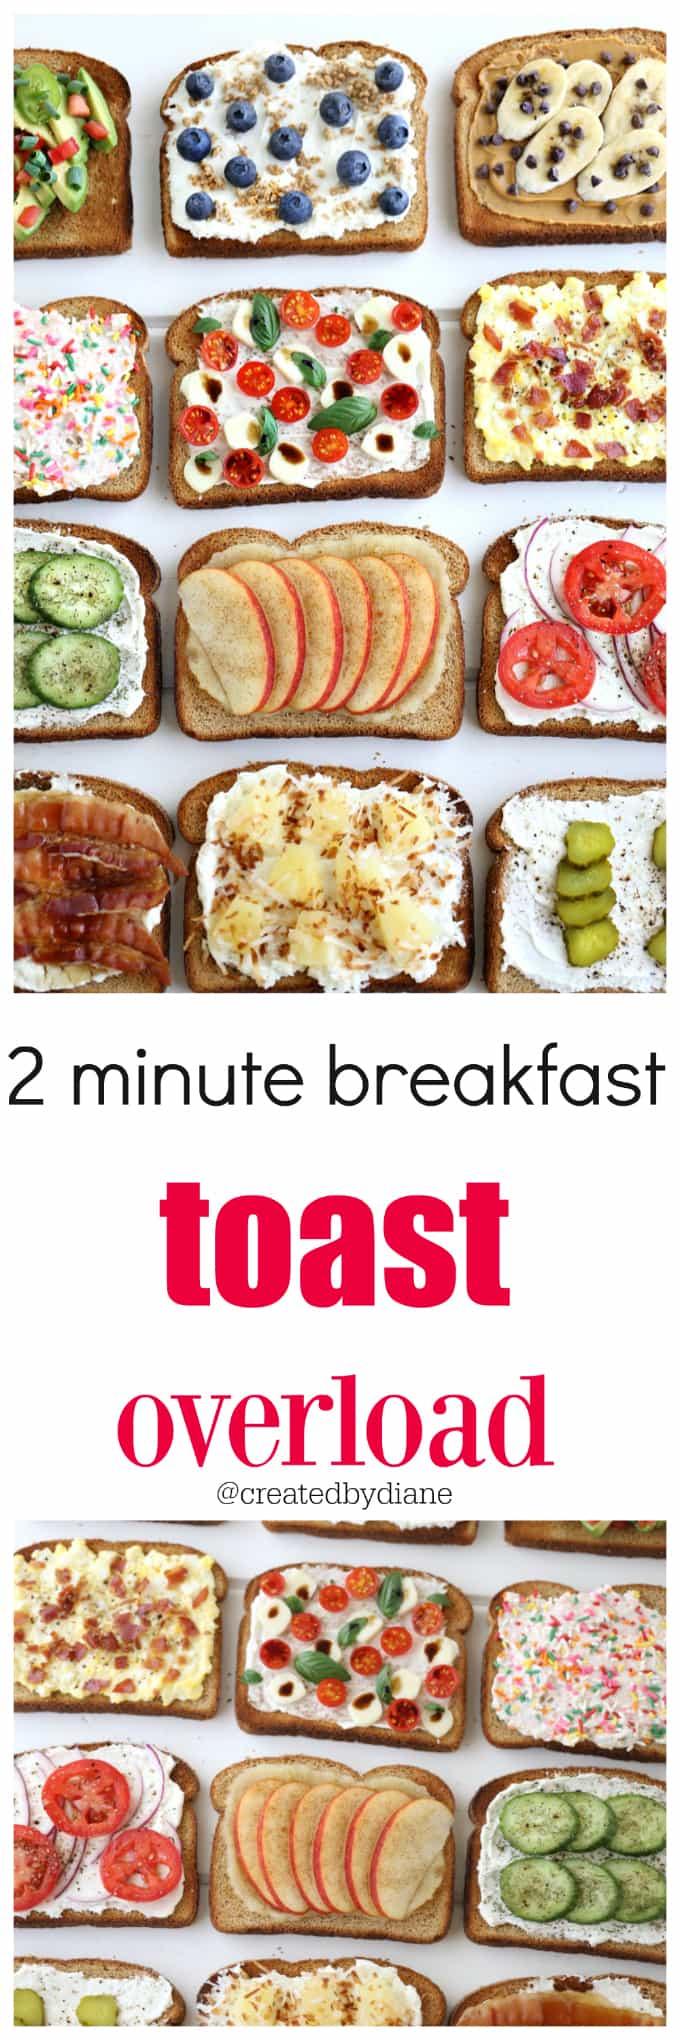 2 minute breakfast toast overload @createdbydiane